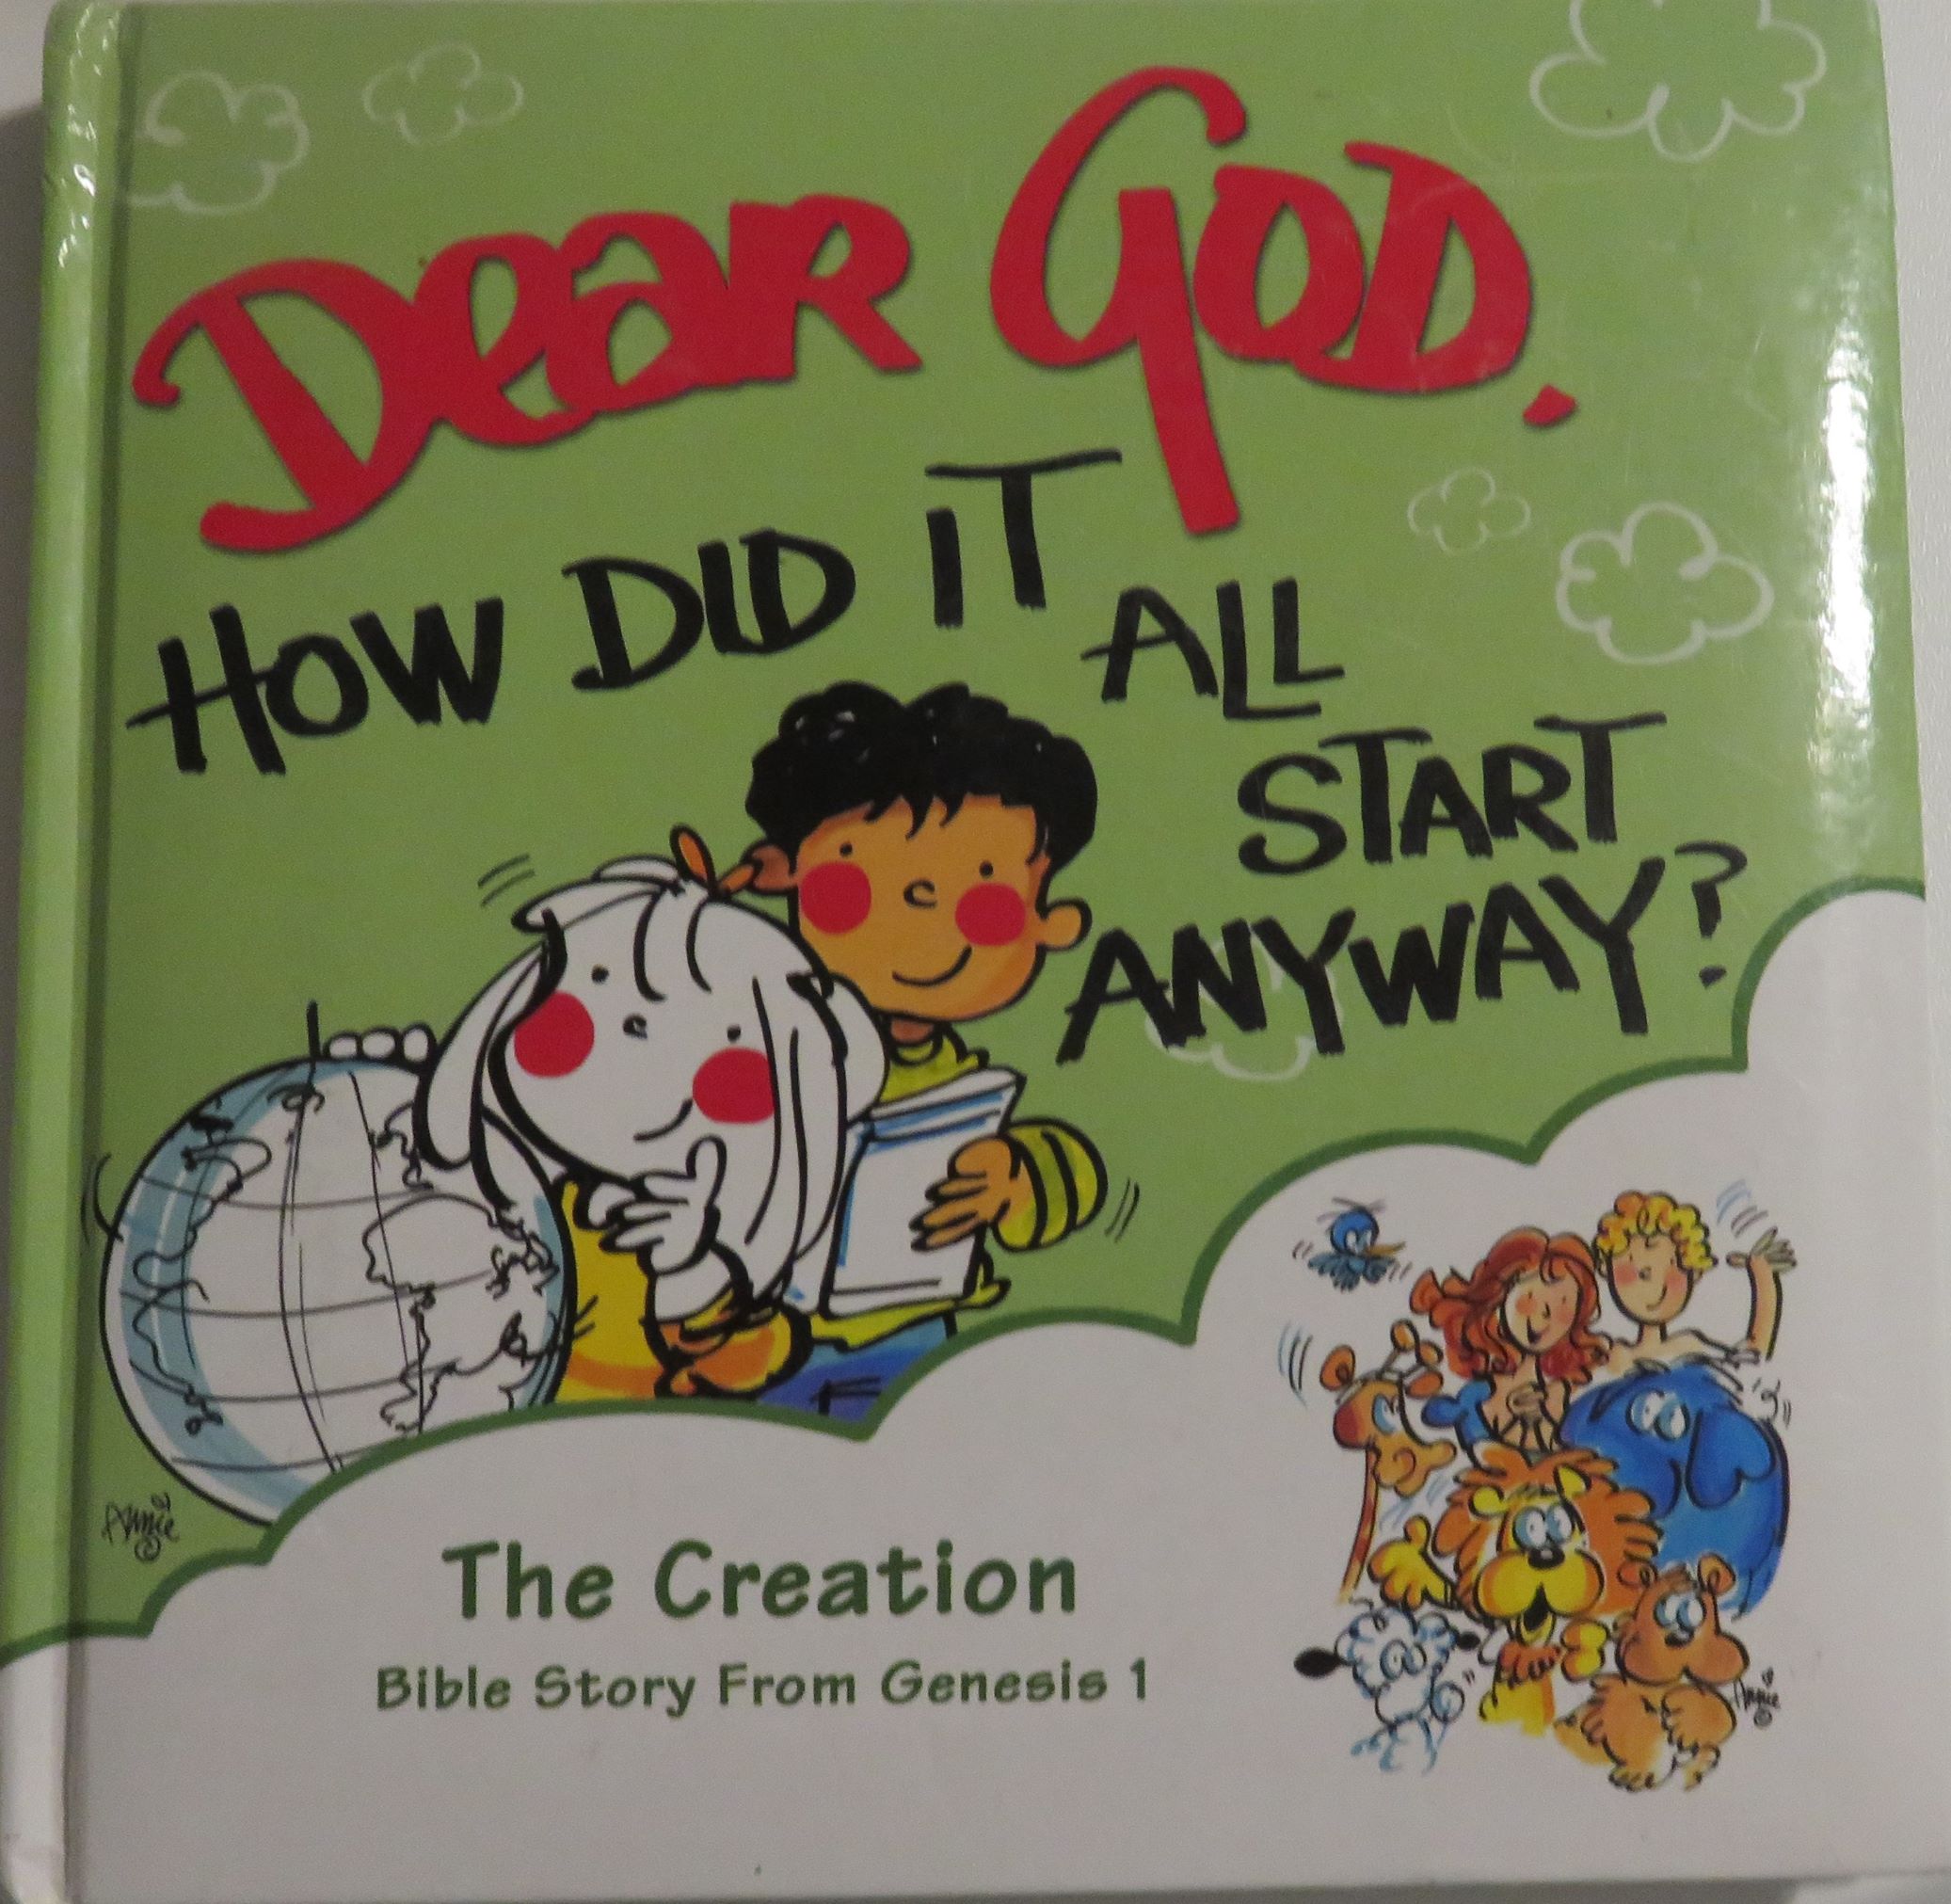 Dear God, How Did It All Start Anyway?